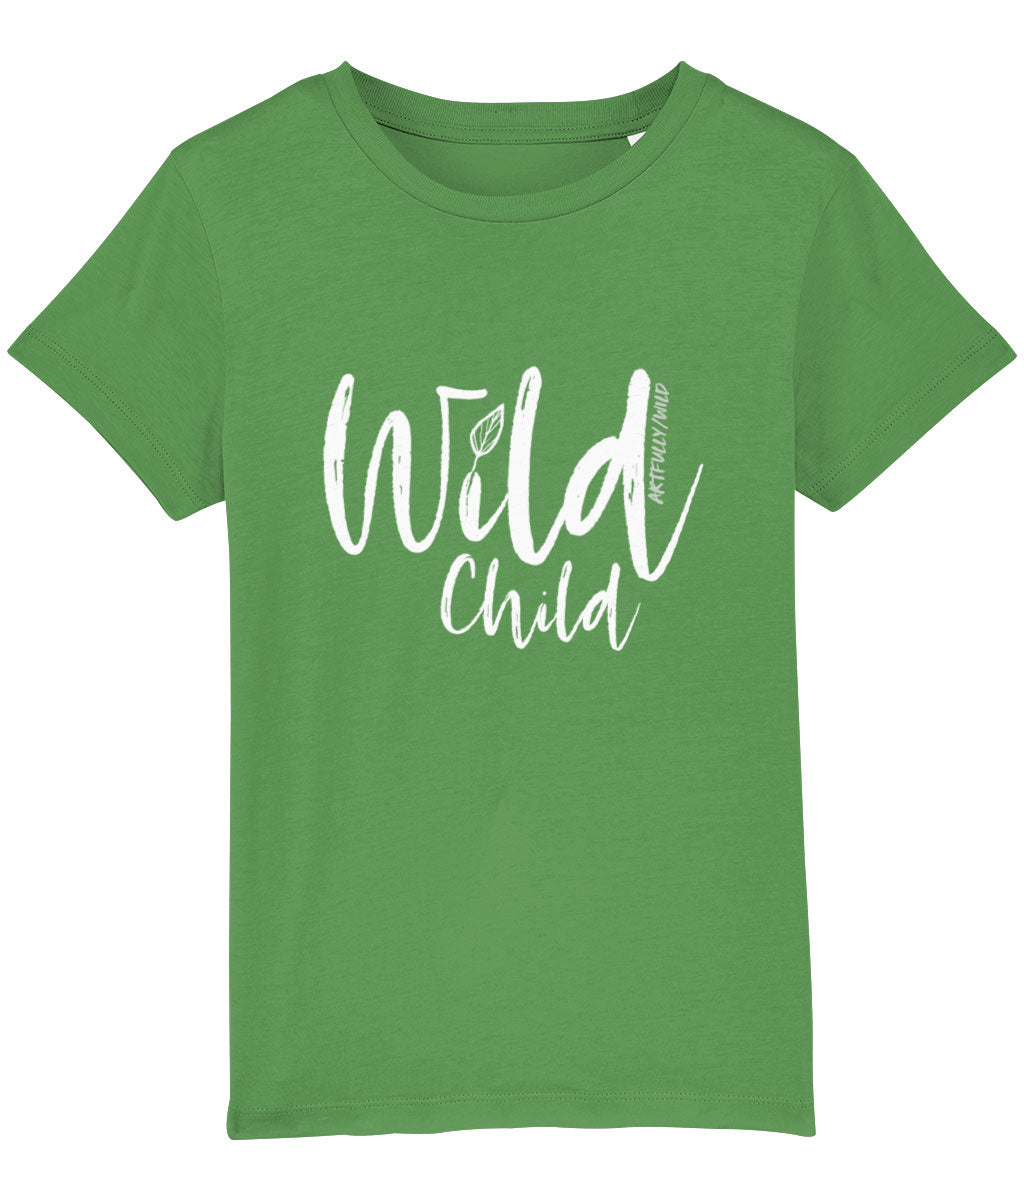 Youth Wild Child T-Shirts